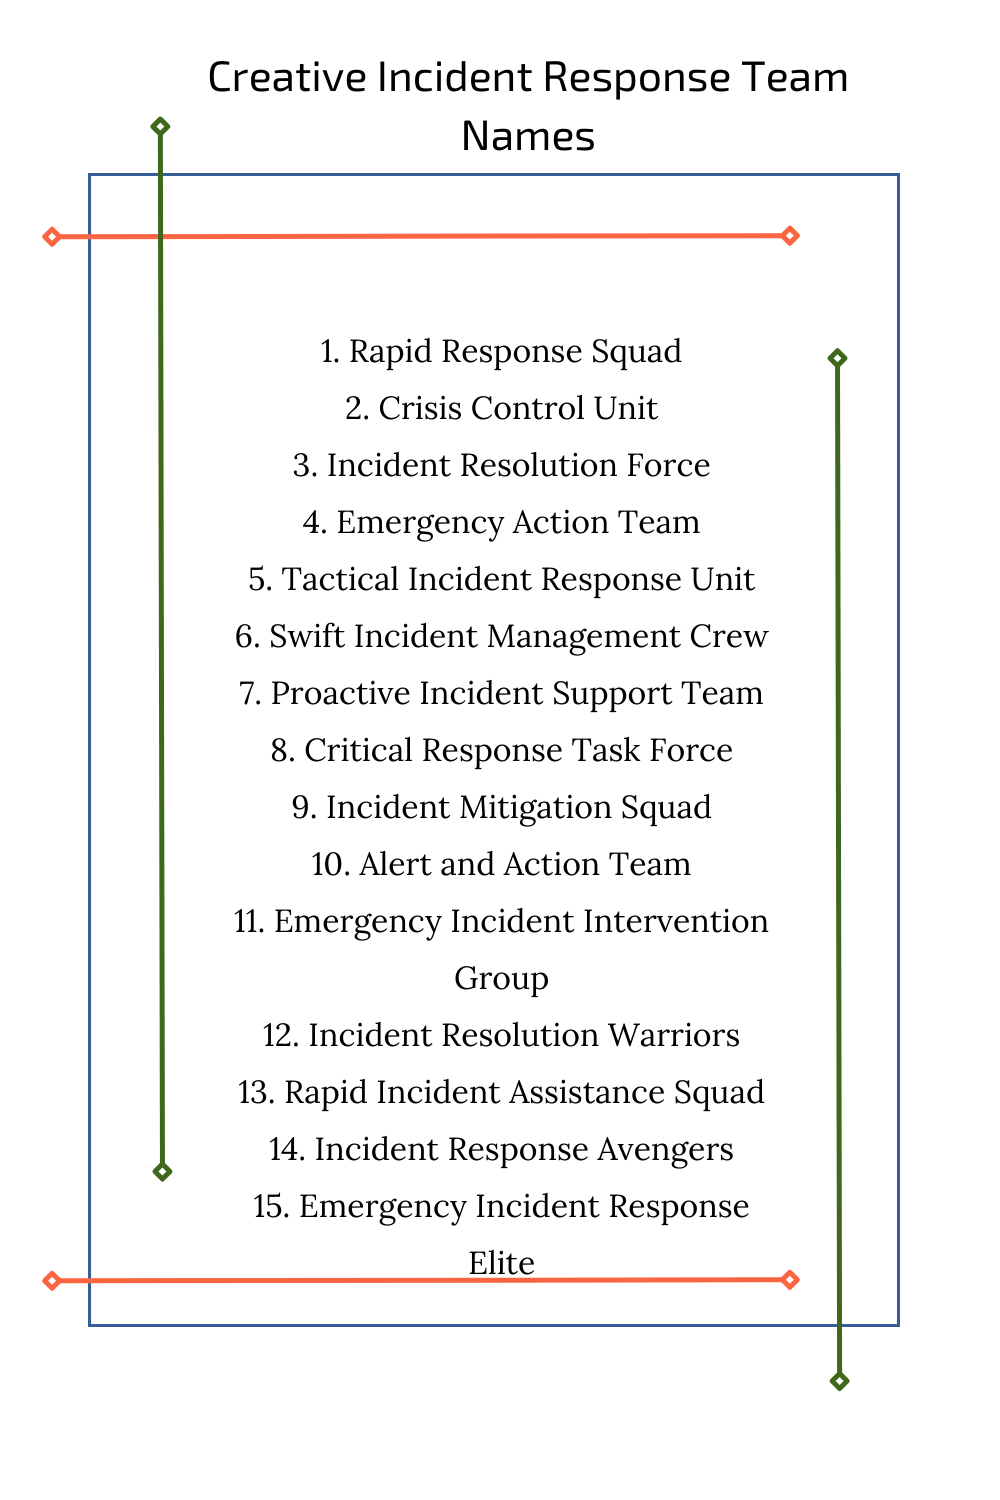 Creative Incident Response Team Names